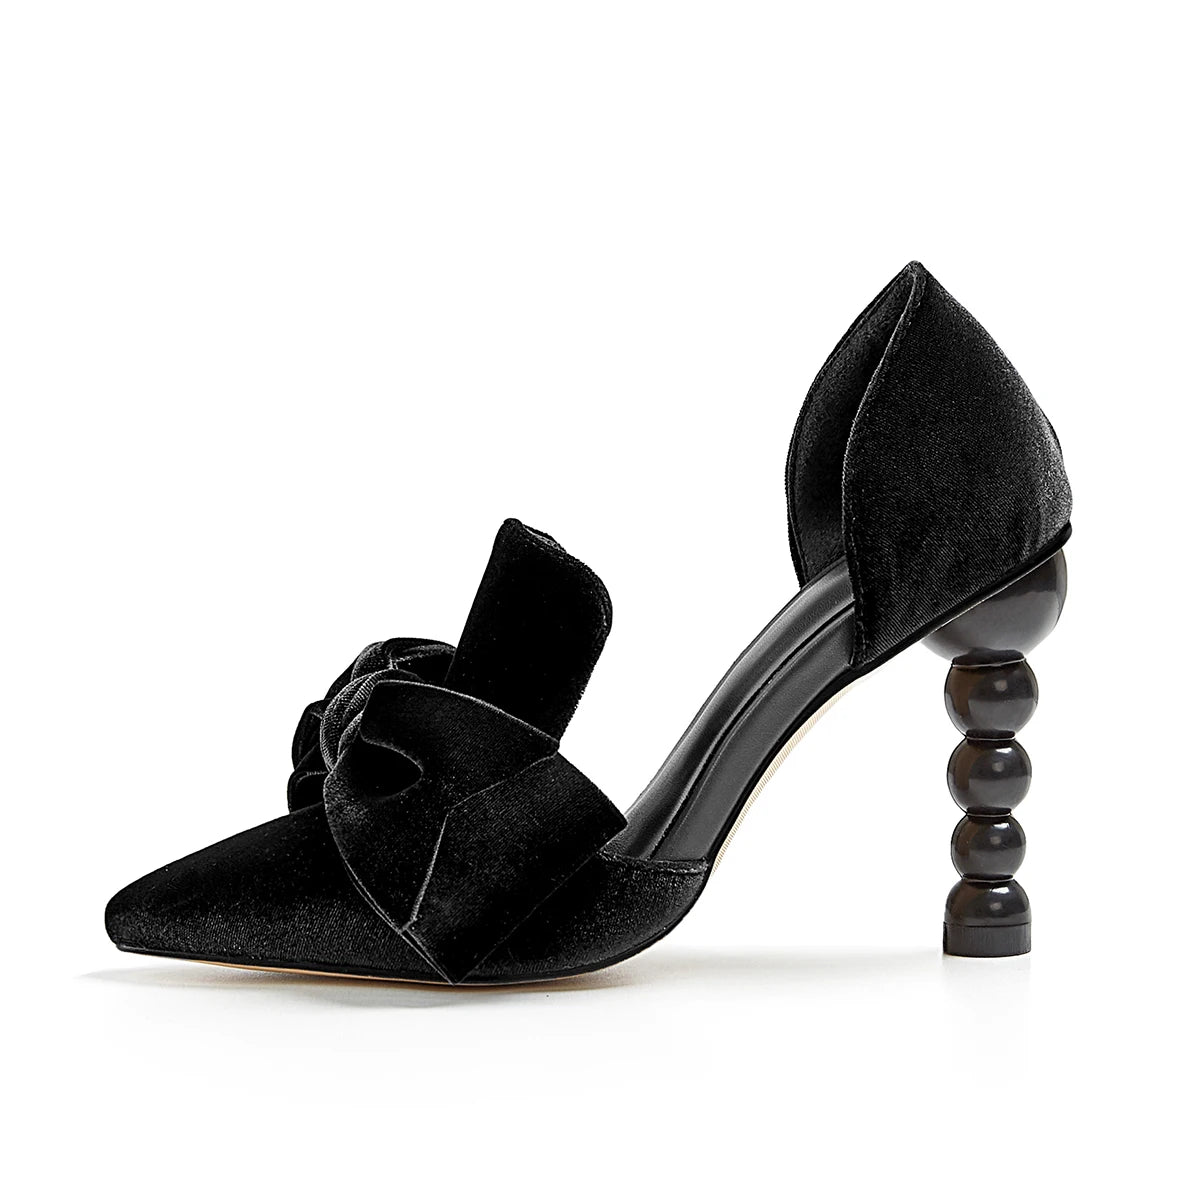 TEEK - French Style Bowtie Balled Heels SHOES theteekdotcom Black Velvet US 5.5 | Label 5 